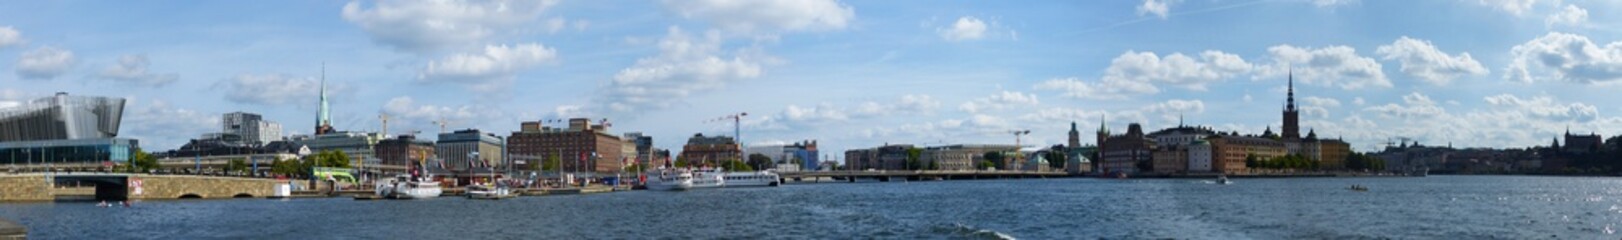 Fototapeta na wymiar Panoramic view and bird's eye view of the historic center of Stockholm, Gamla Stan, Stockholm Archipelago.